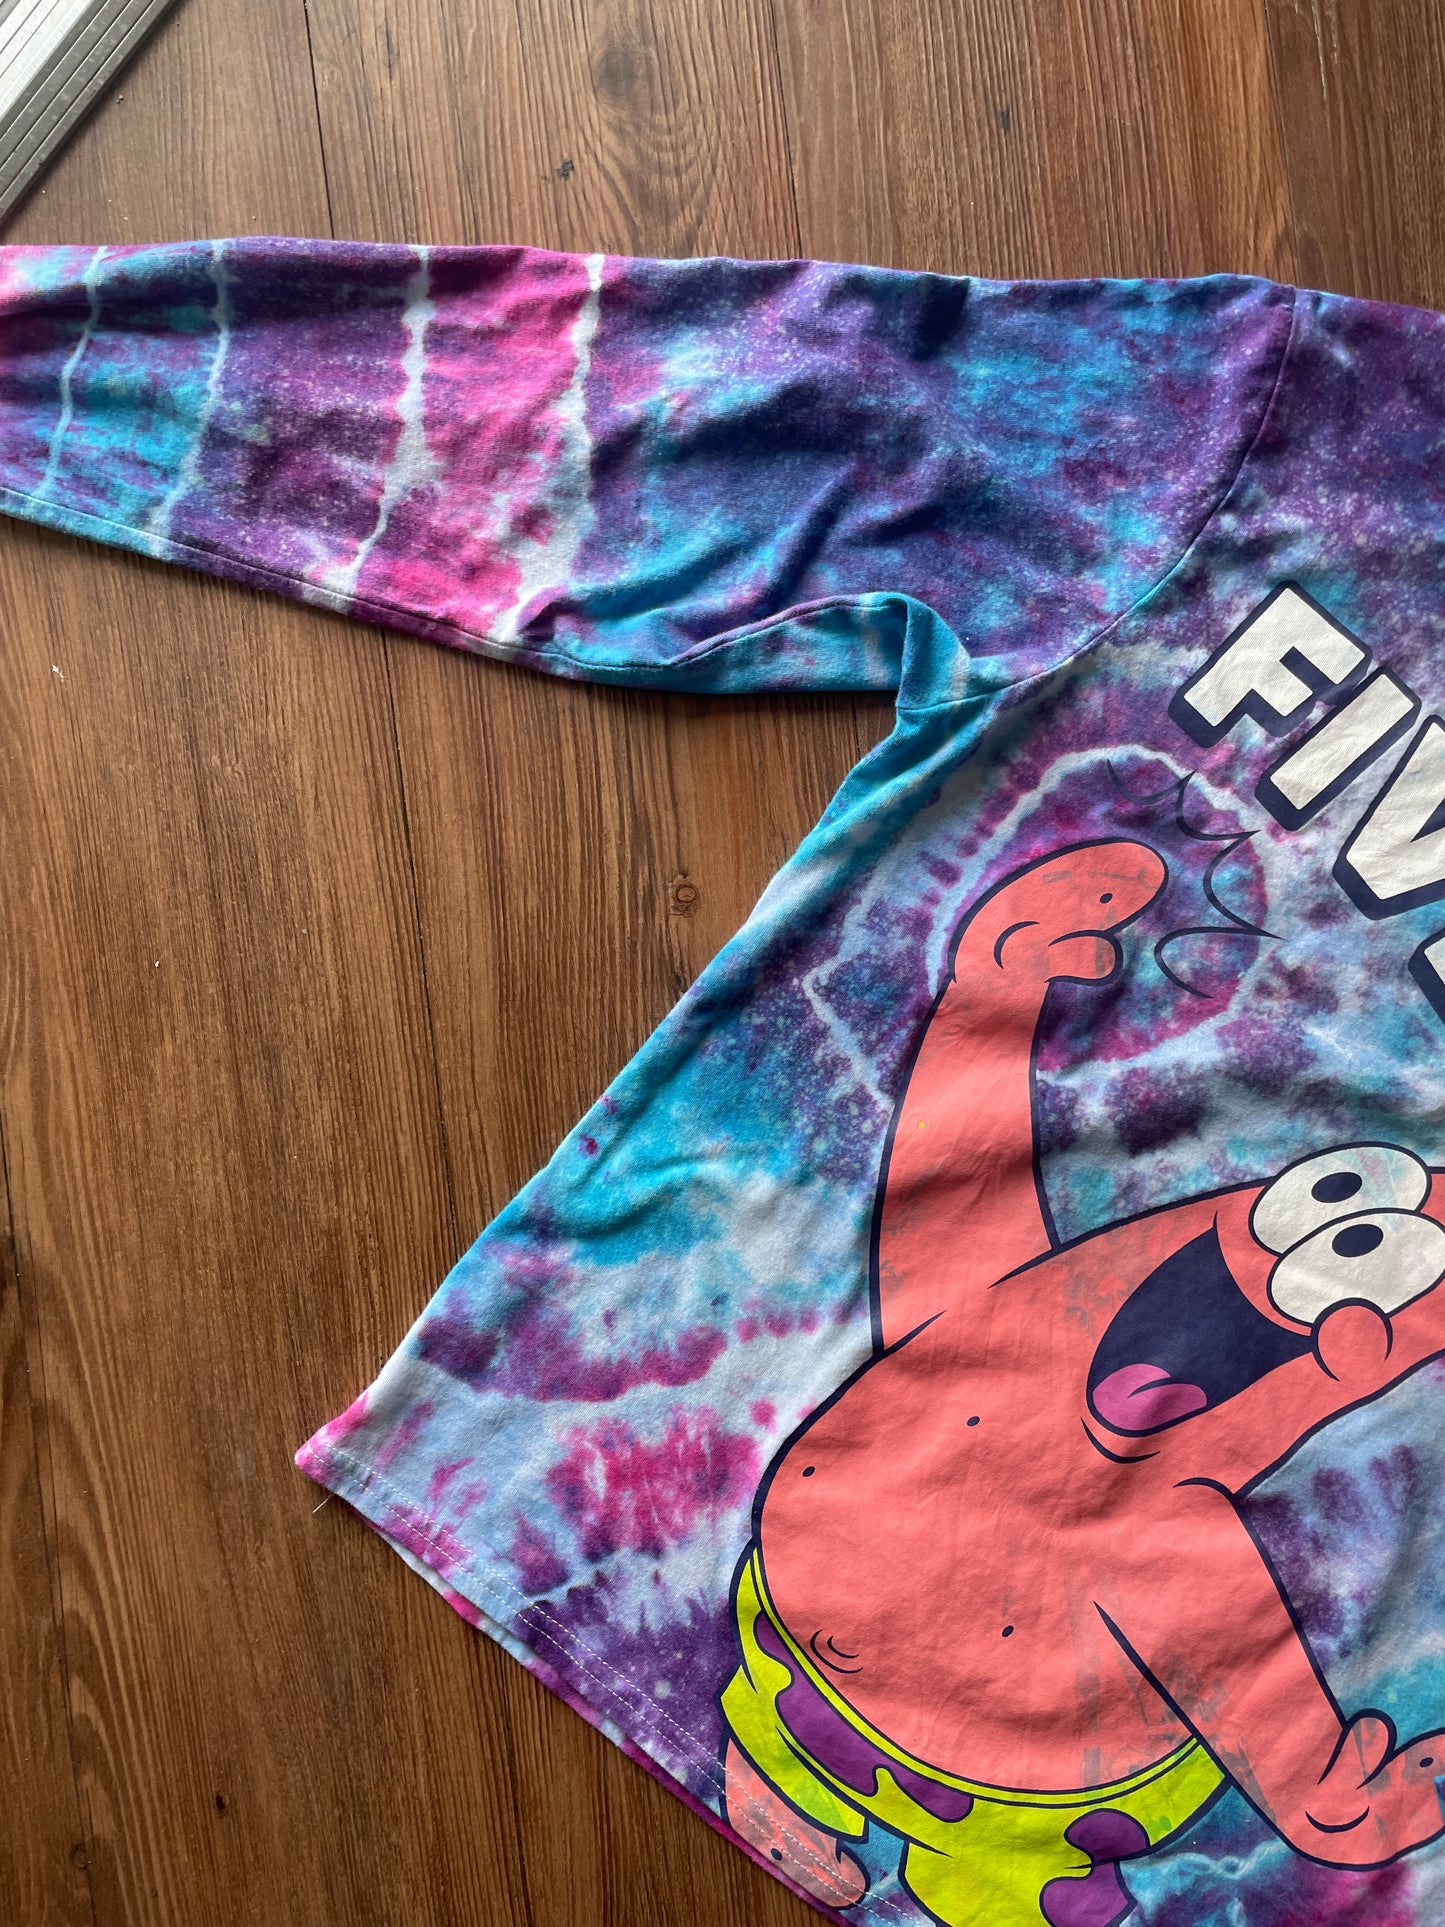 MEDIUM Unisex SpongeBob Squarepants High Five Handmade Galaxy Geode Tie Dye T-Shirt | Blue, Purple, and Pink Long Sleeve Tee